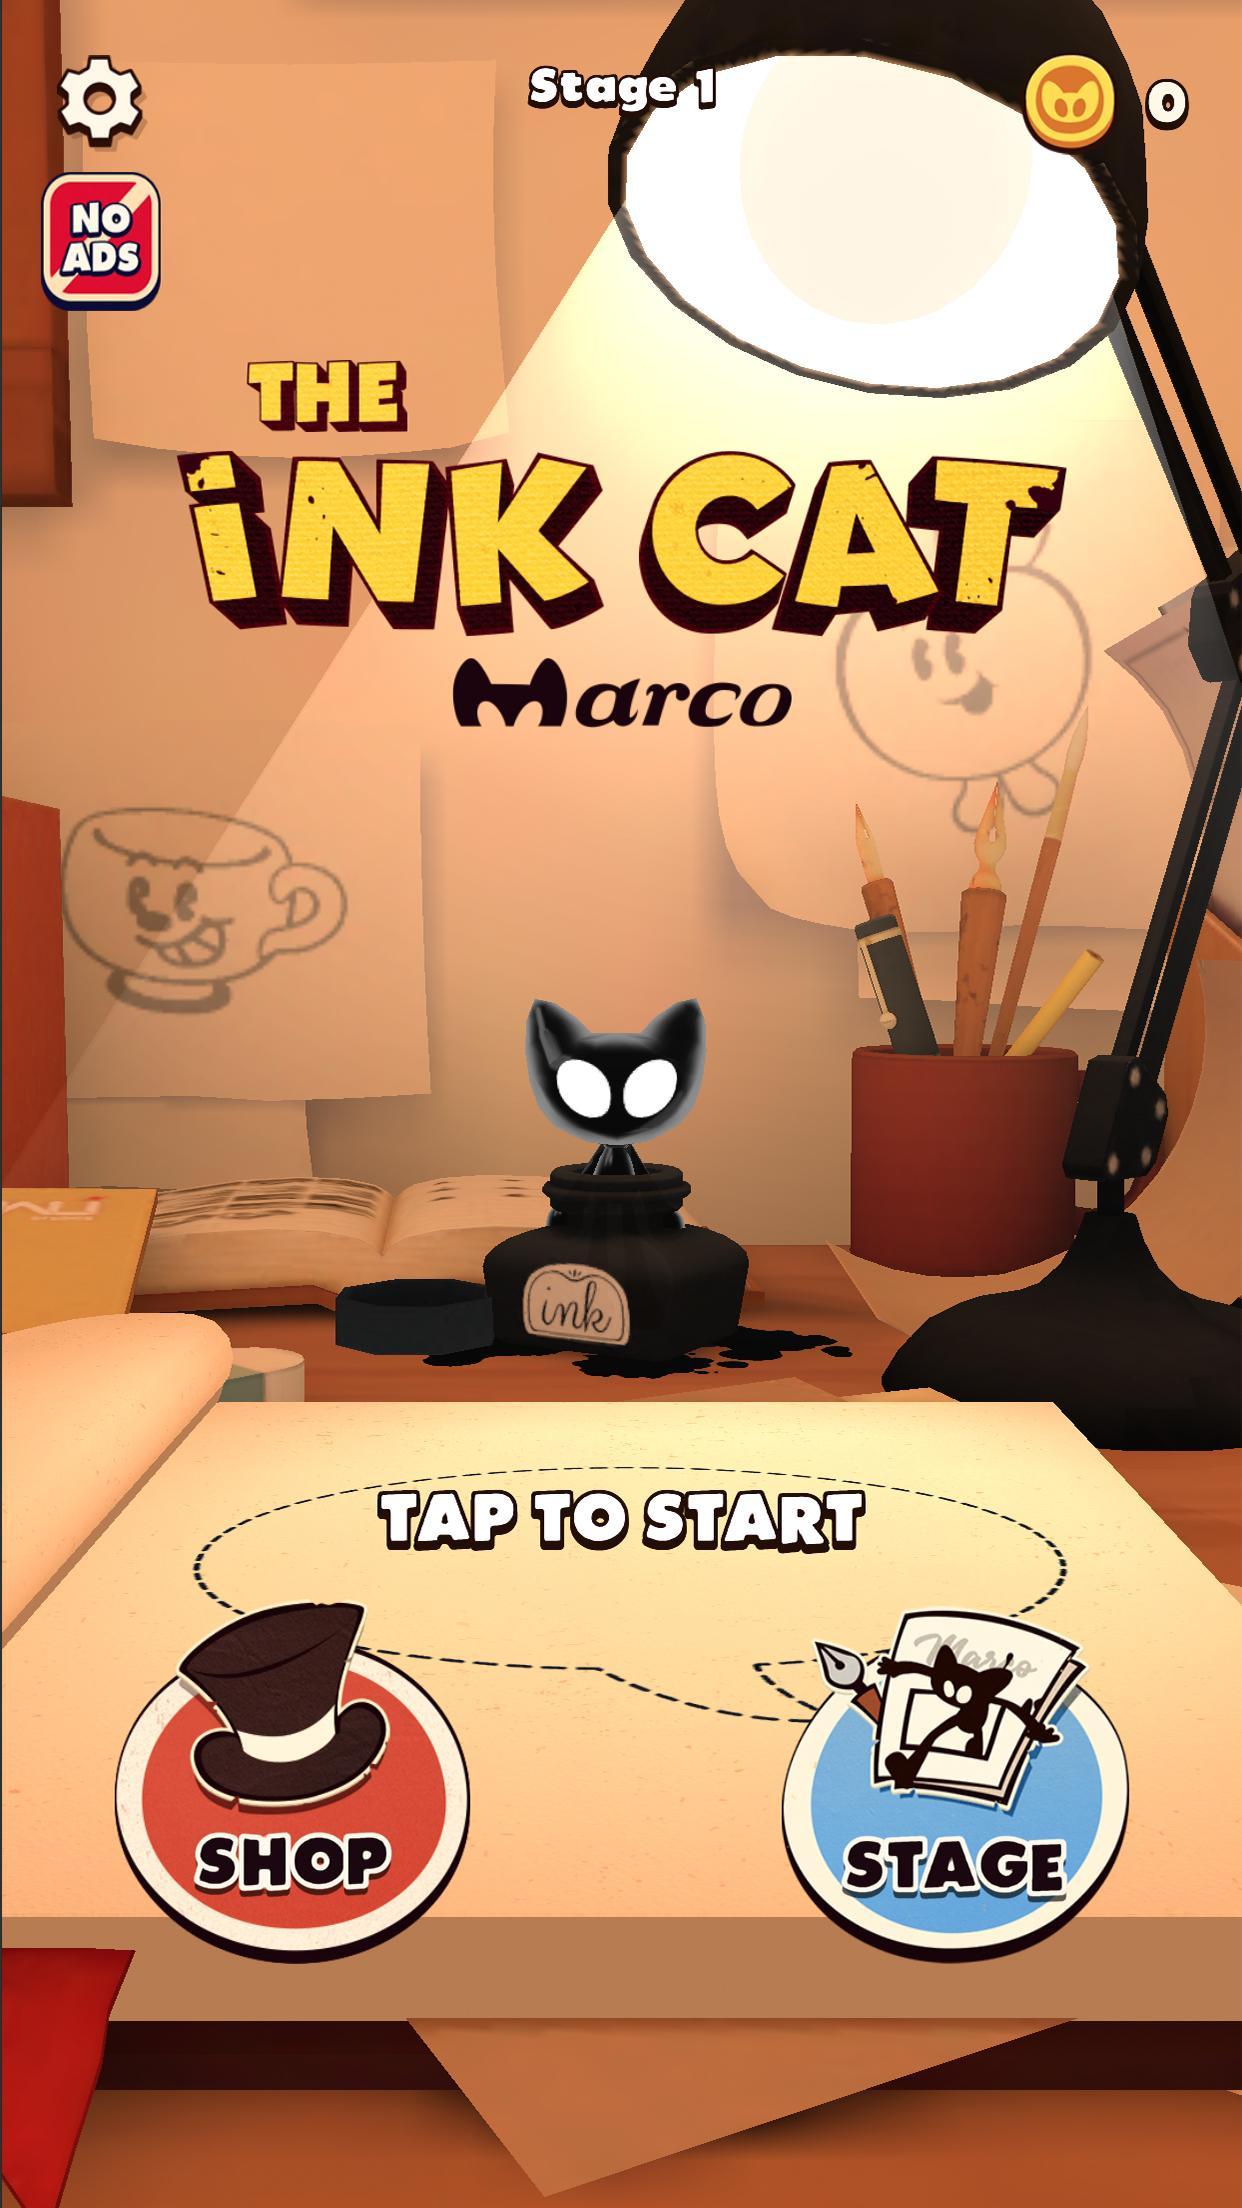 Android용 잉크캣 마르코 (Ink Cat Marco) Apk 다운로드